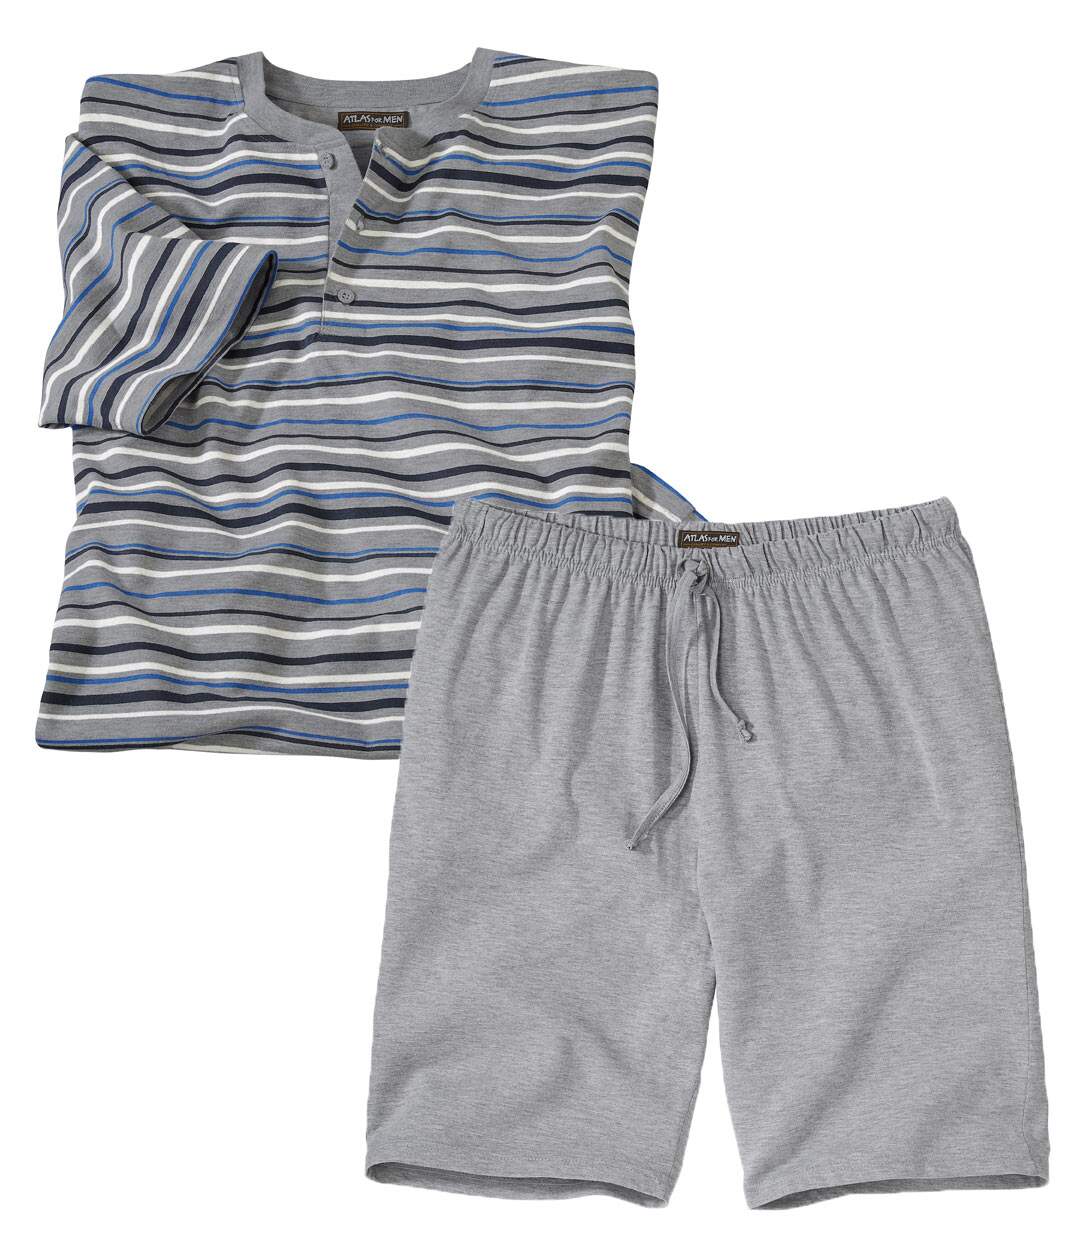 Men's Striped Short Pyjama Set - Grey Atlas For Men